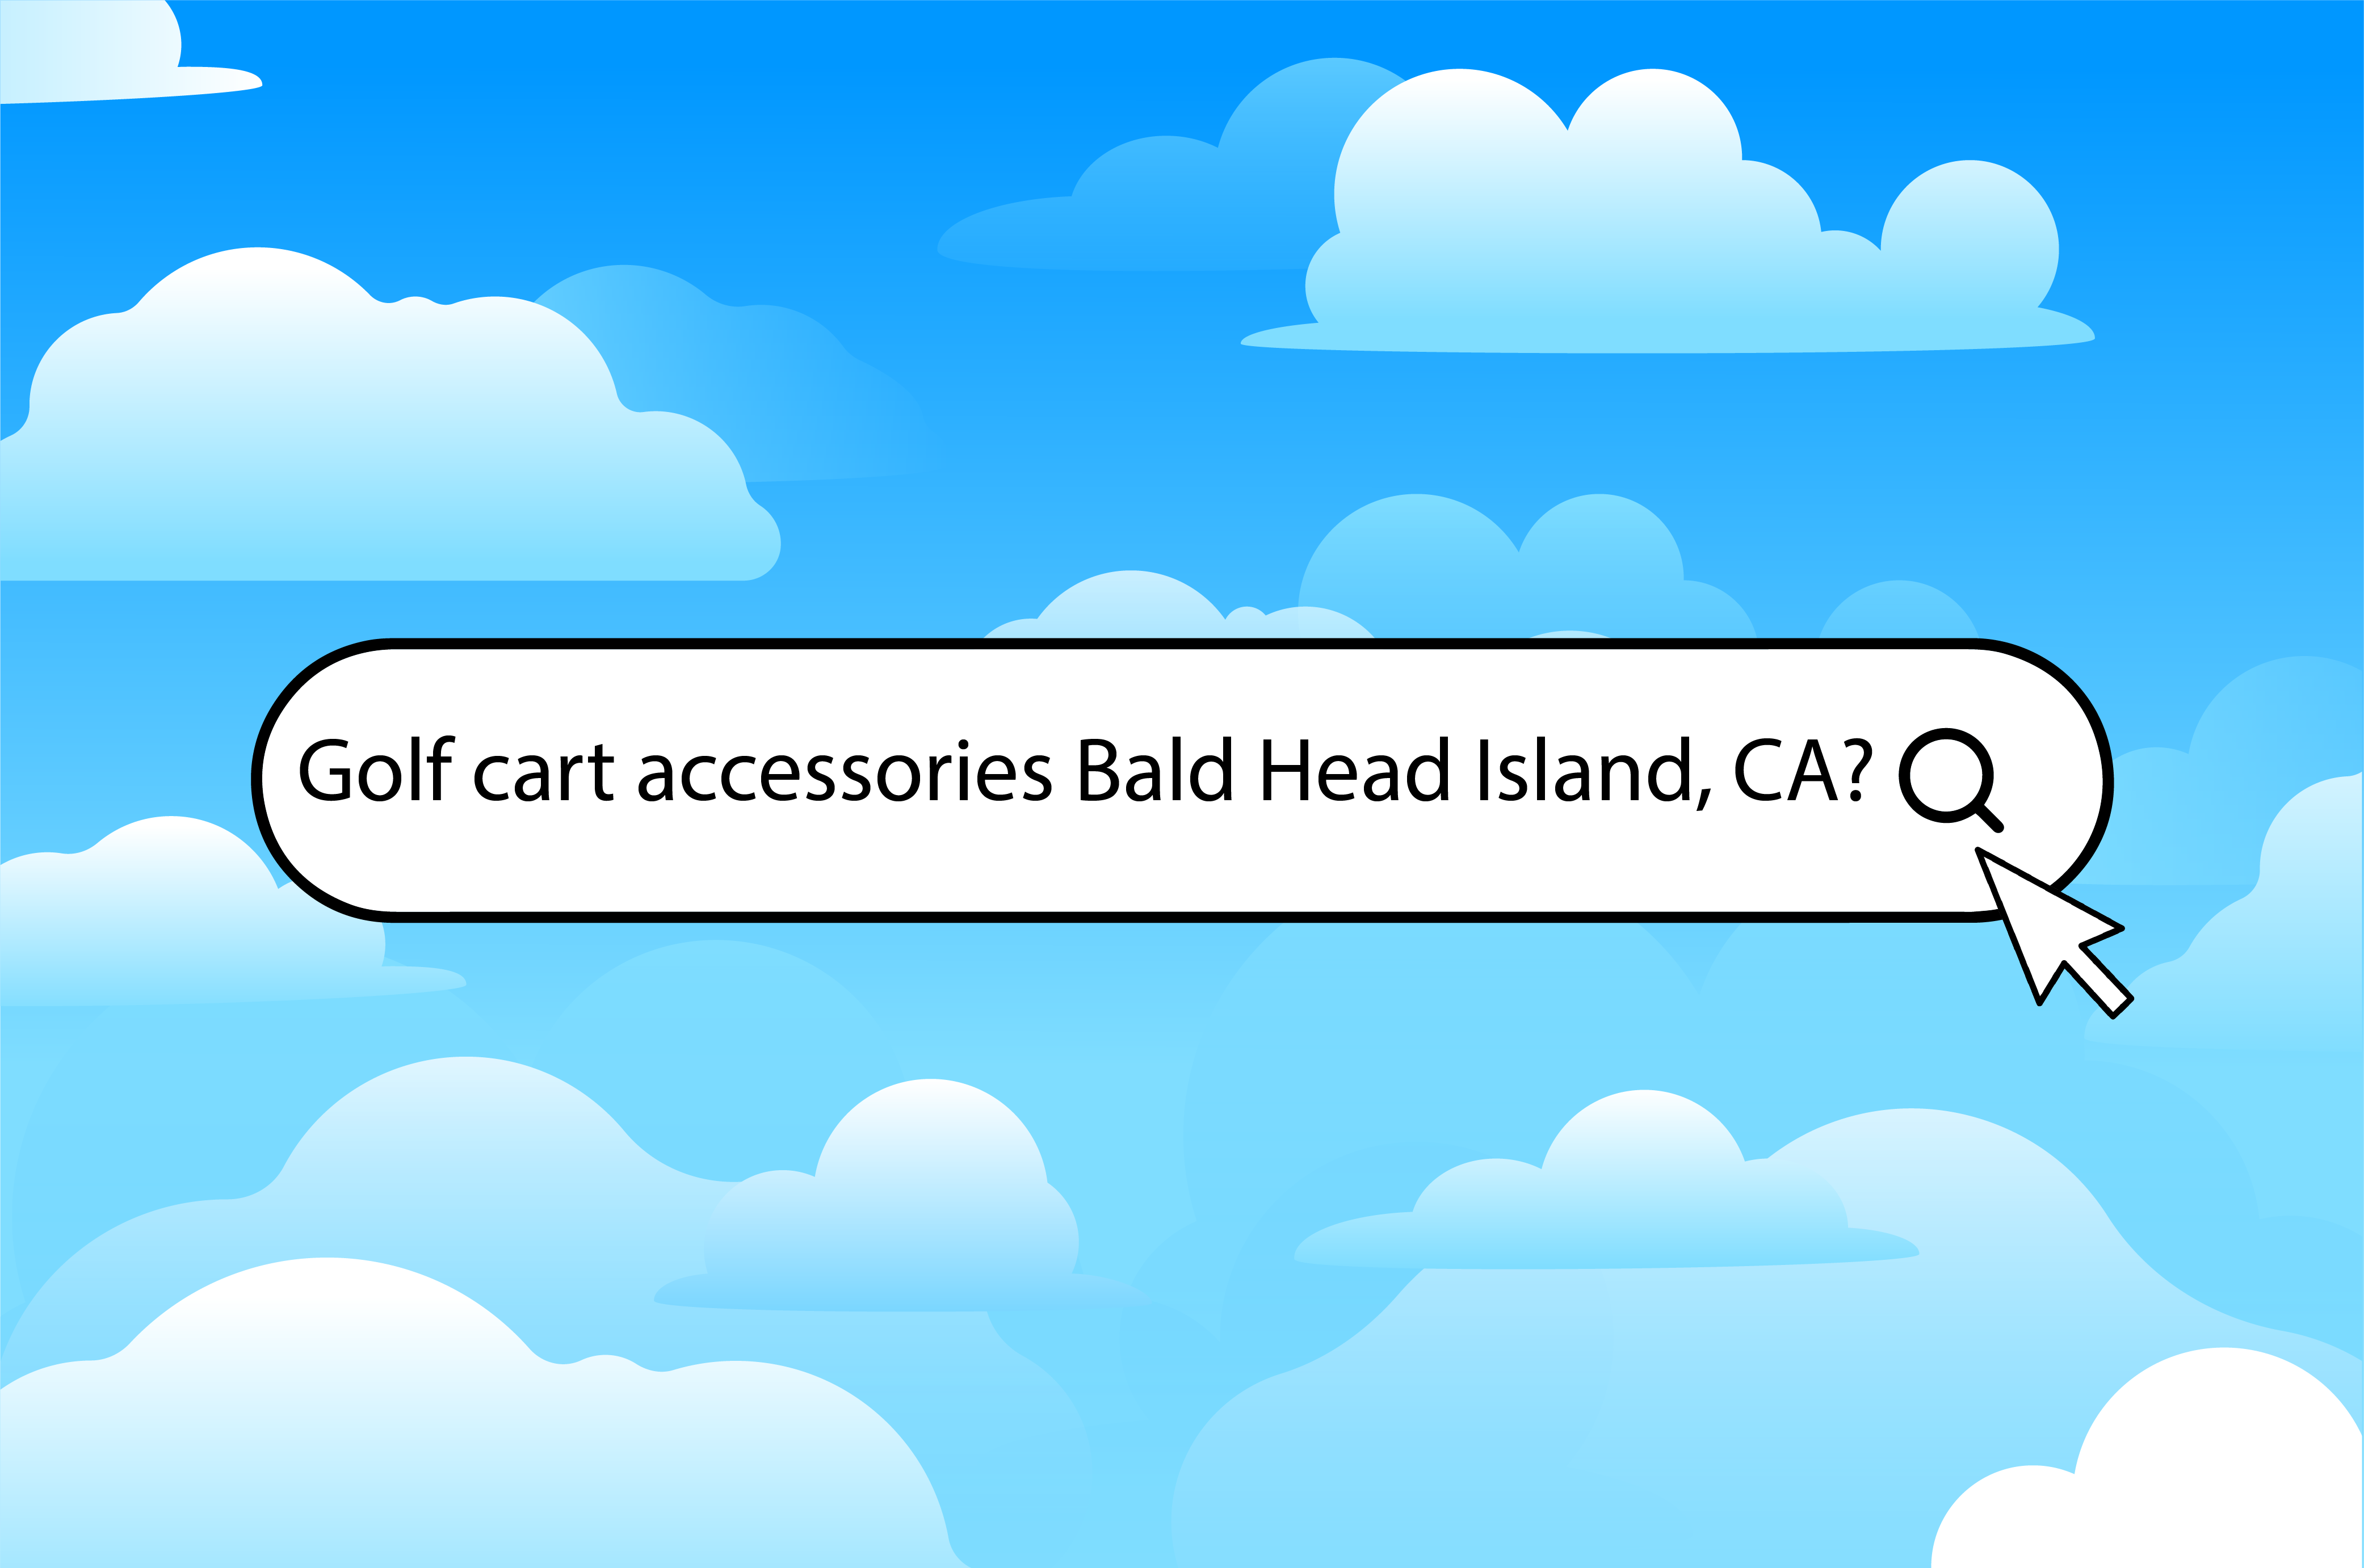 Three ways to find golf cart accessories in Bald Head Island, NC